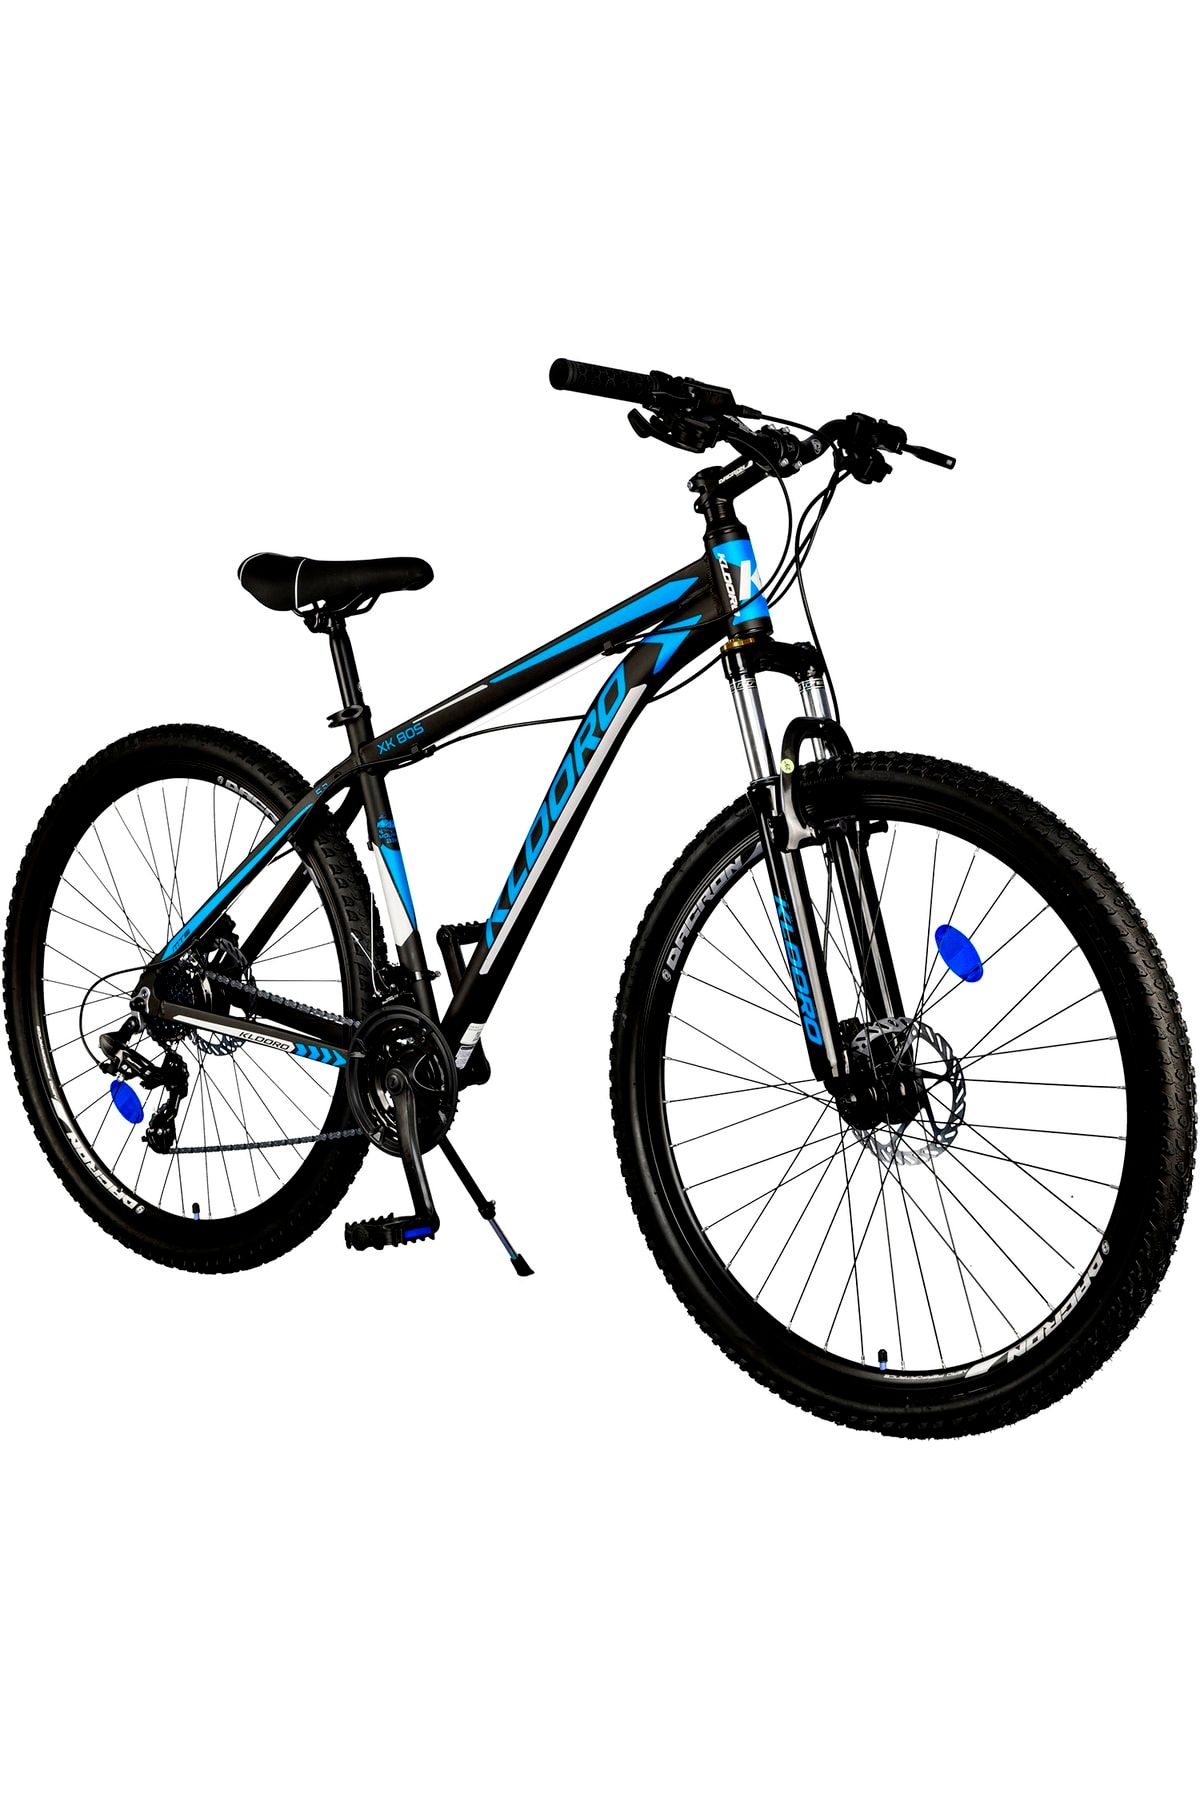 Kldoro Xk805 5.3 29 Jant Bisiklet 21 Vites Hidrolik Disk Fren Dağ Bisikleti